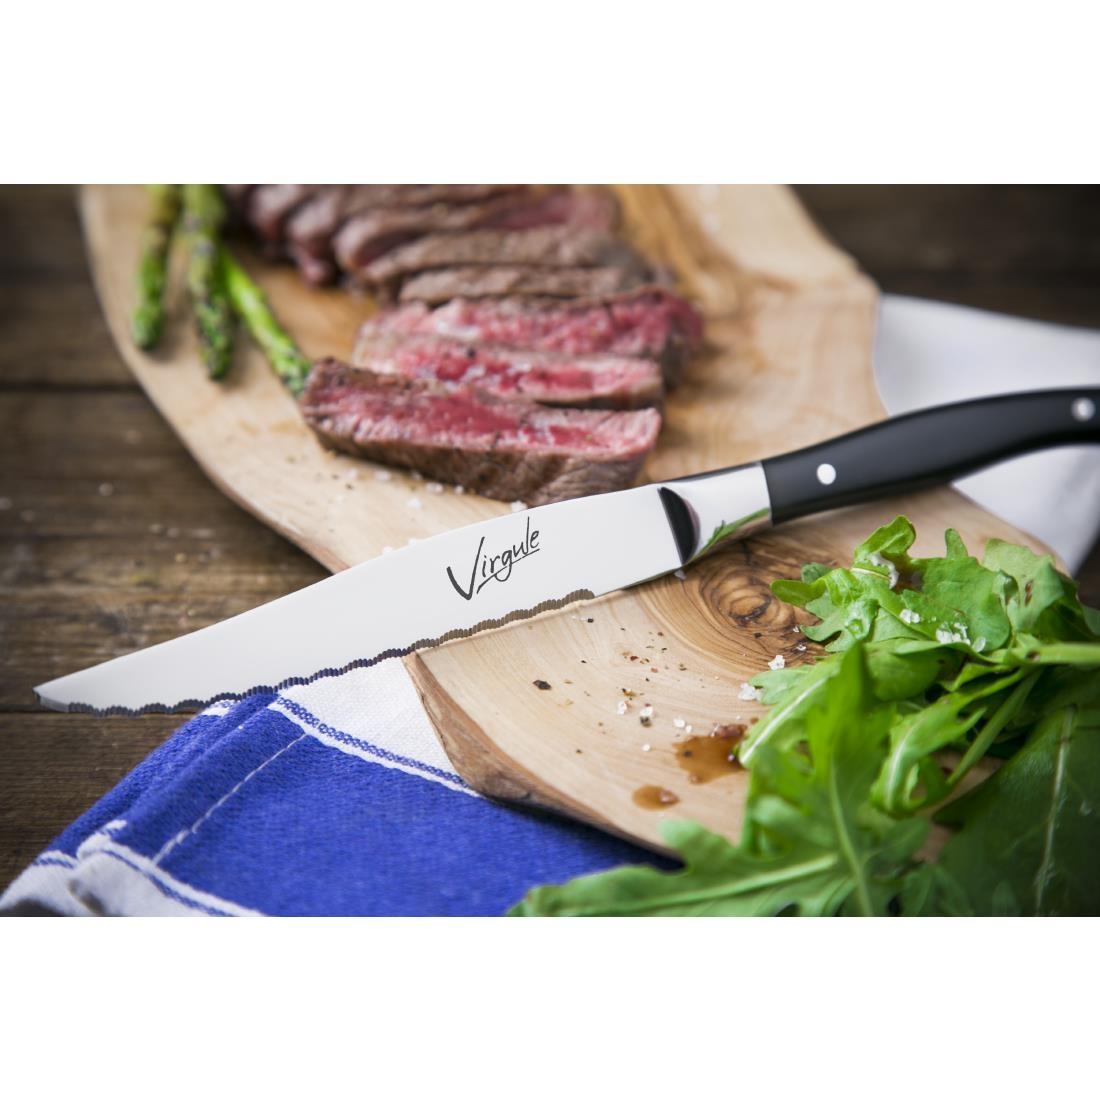 Amefa Virgule Steak Knives (Pack of 12) - DM247  - 3